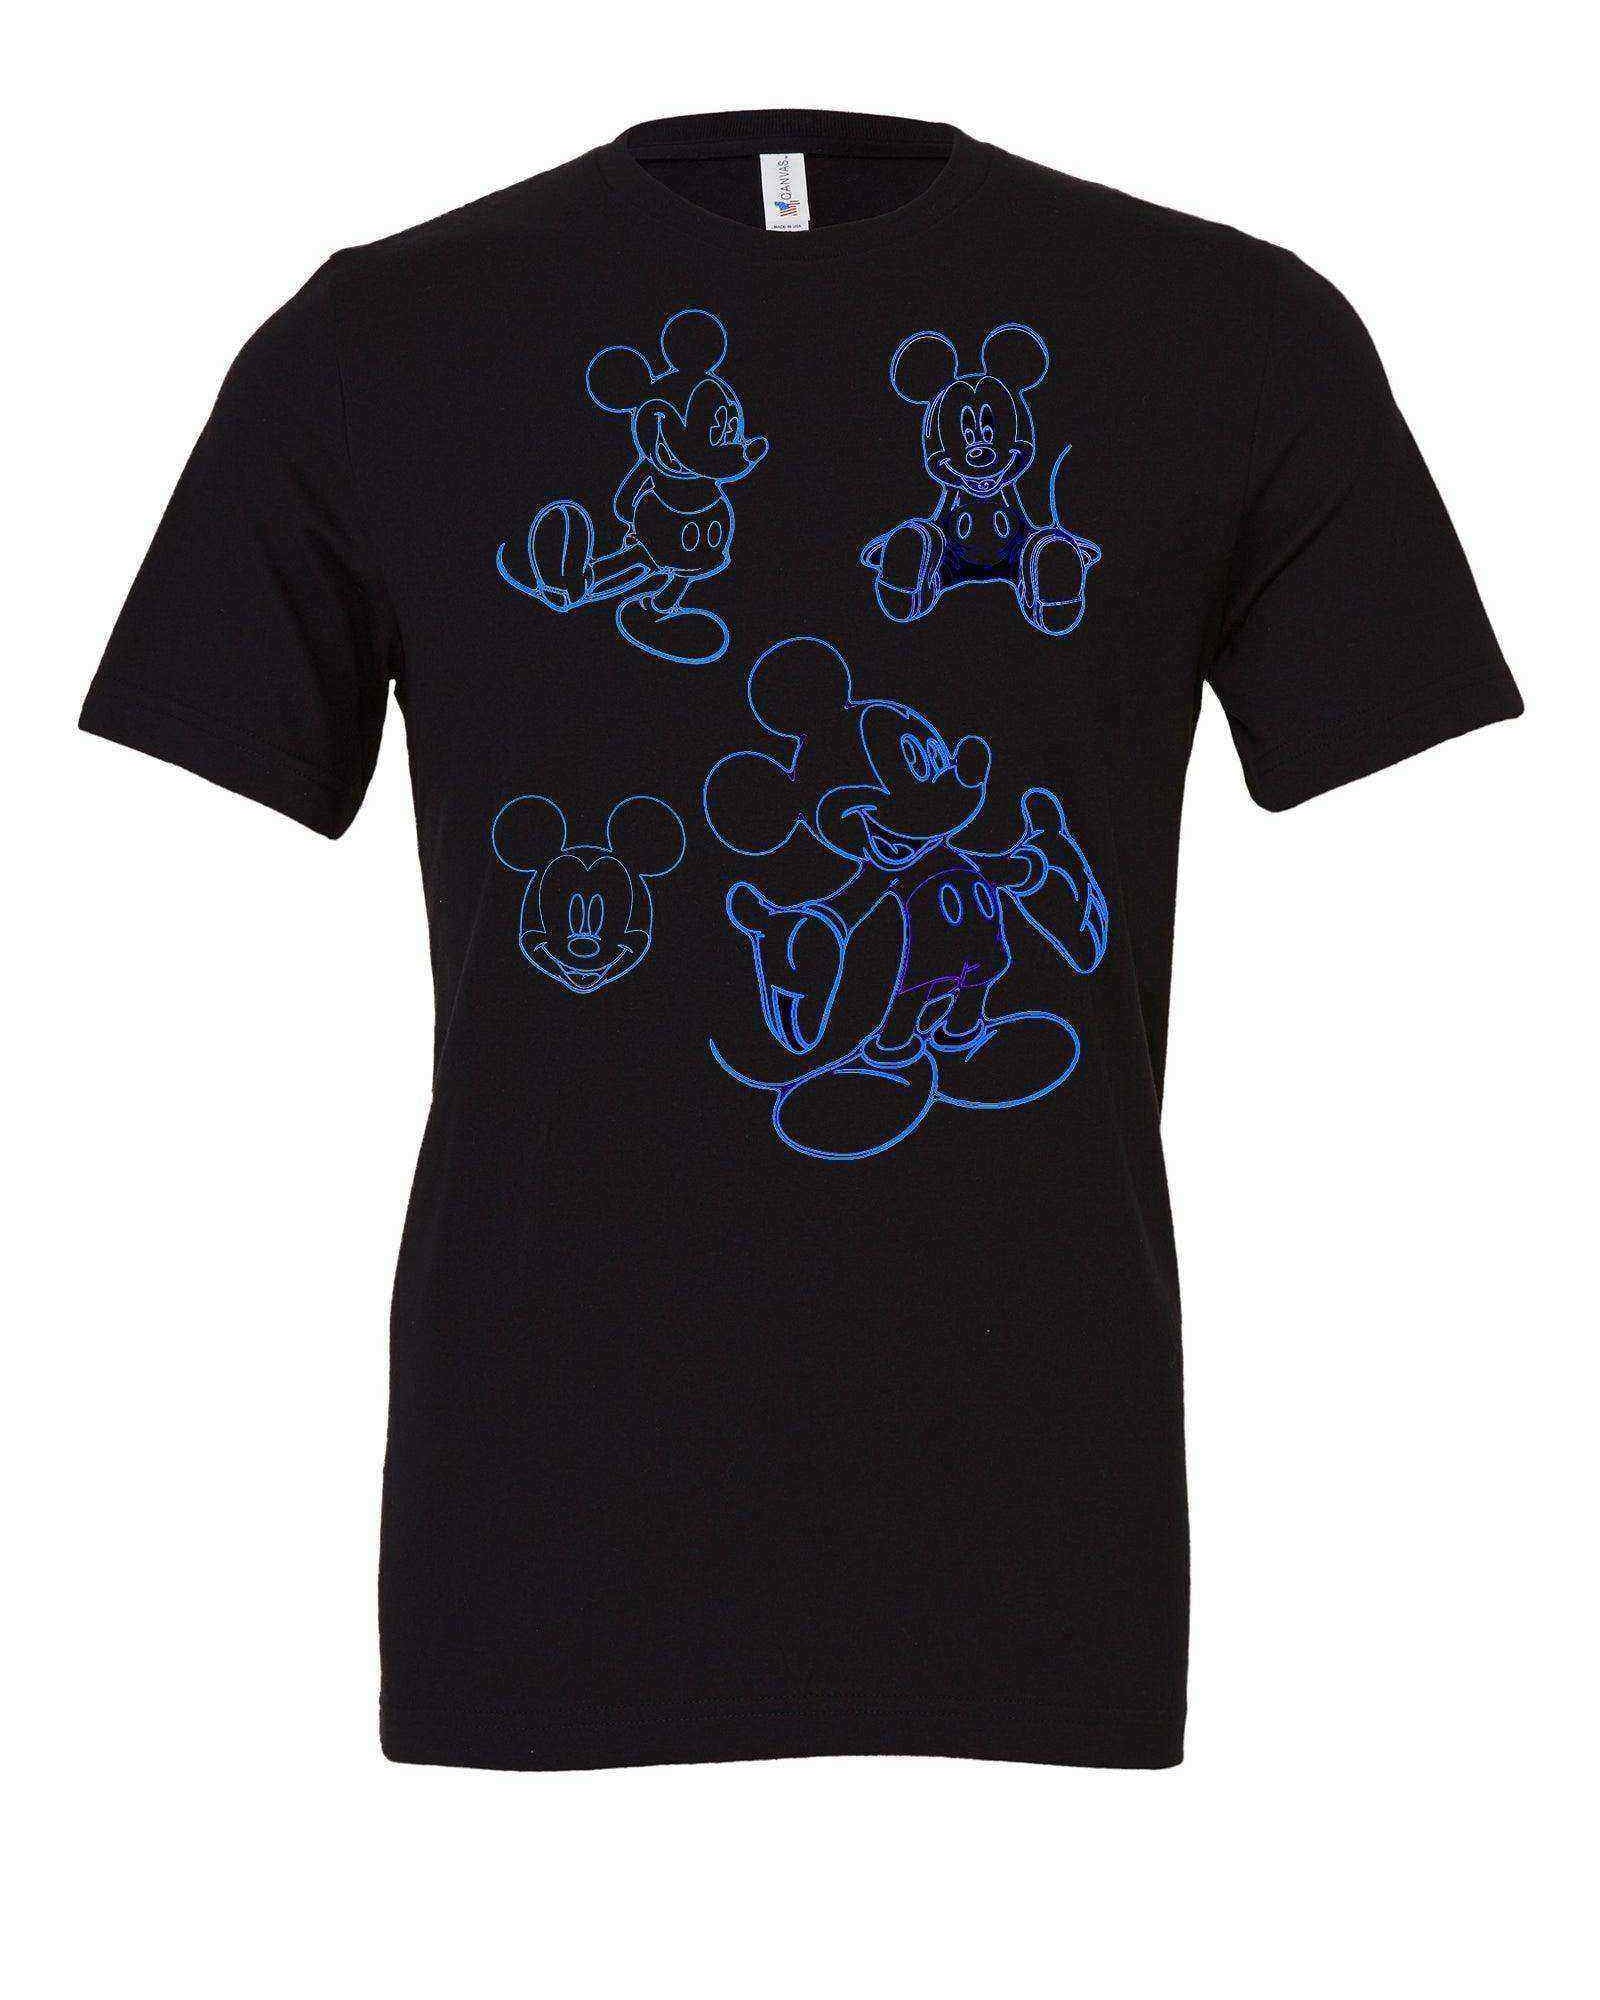 Toddler | Blue Neon Mickey Shirt | Tron Mickey Shirt | Tomorrowland Mickeys Shirt - Dylan's Tees